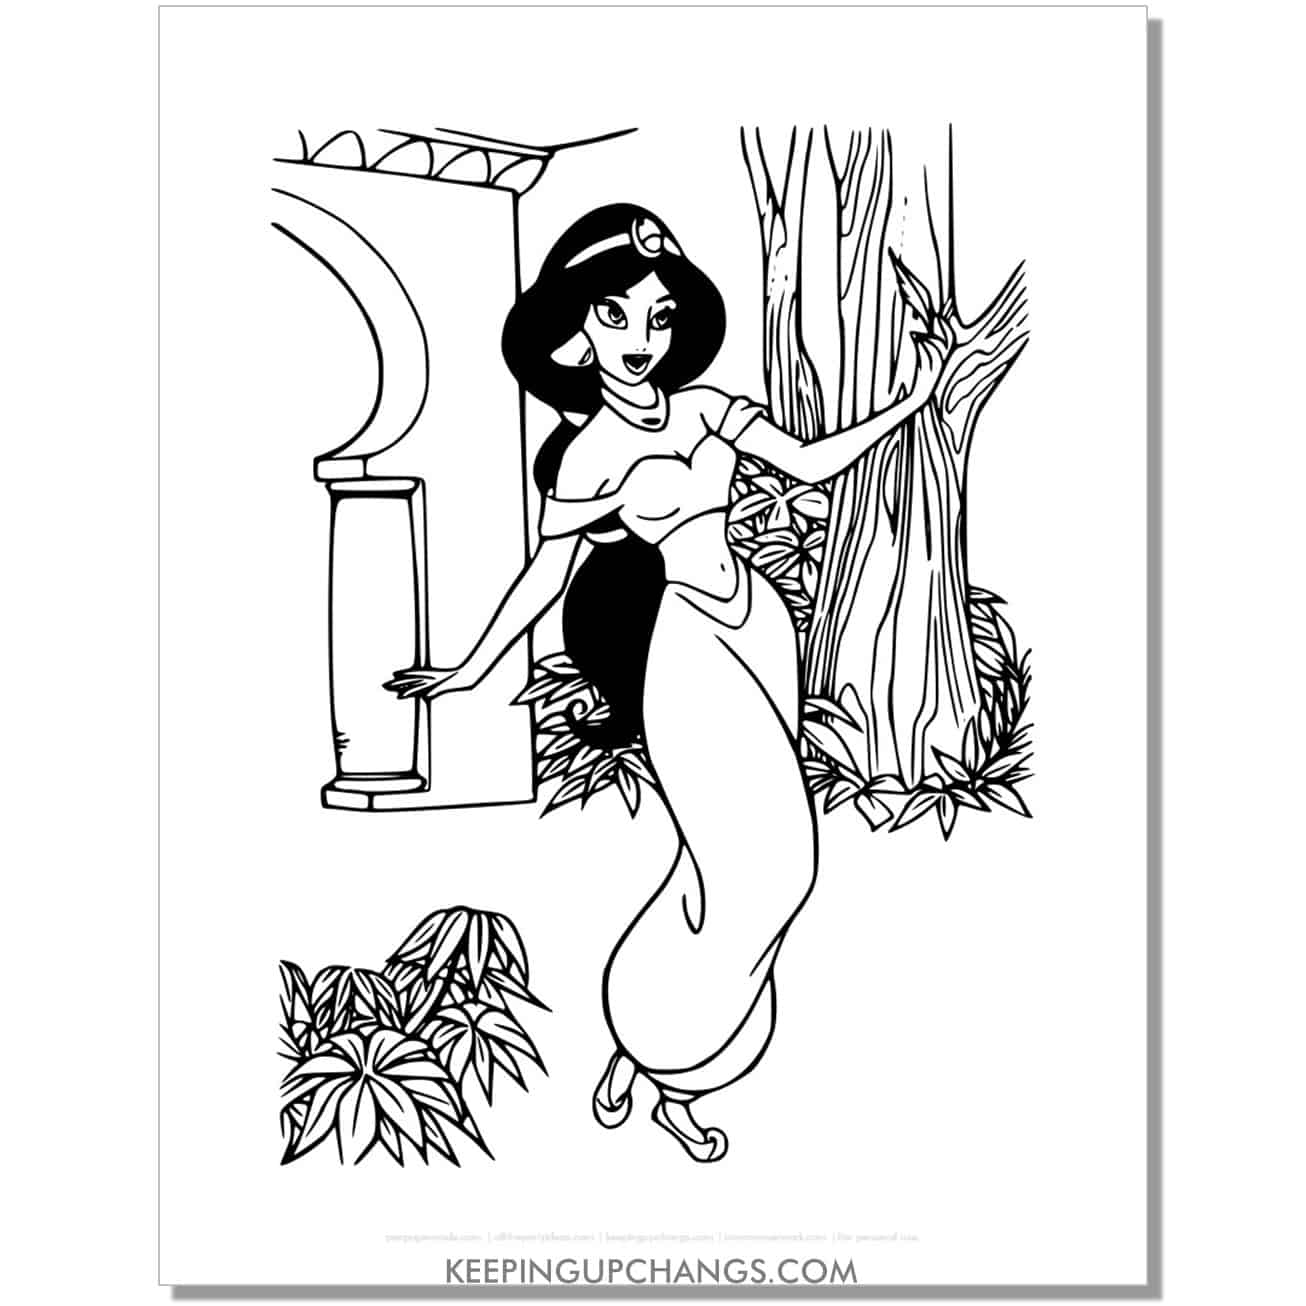 jasmine in her garden coloring page, sheet.